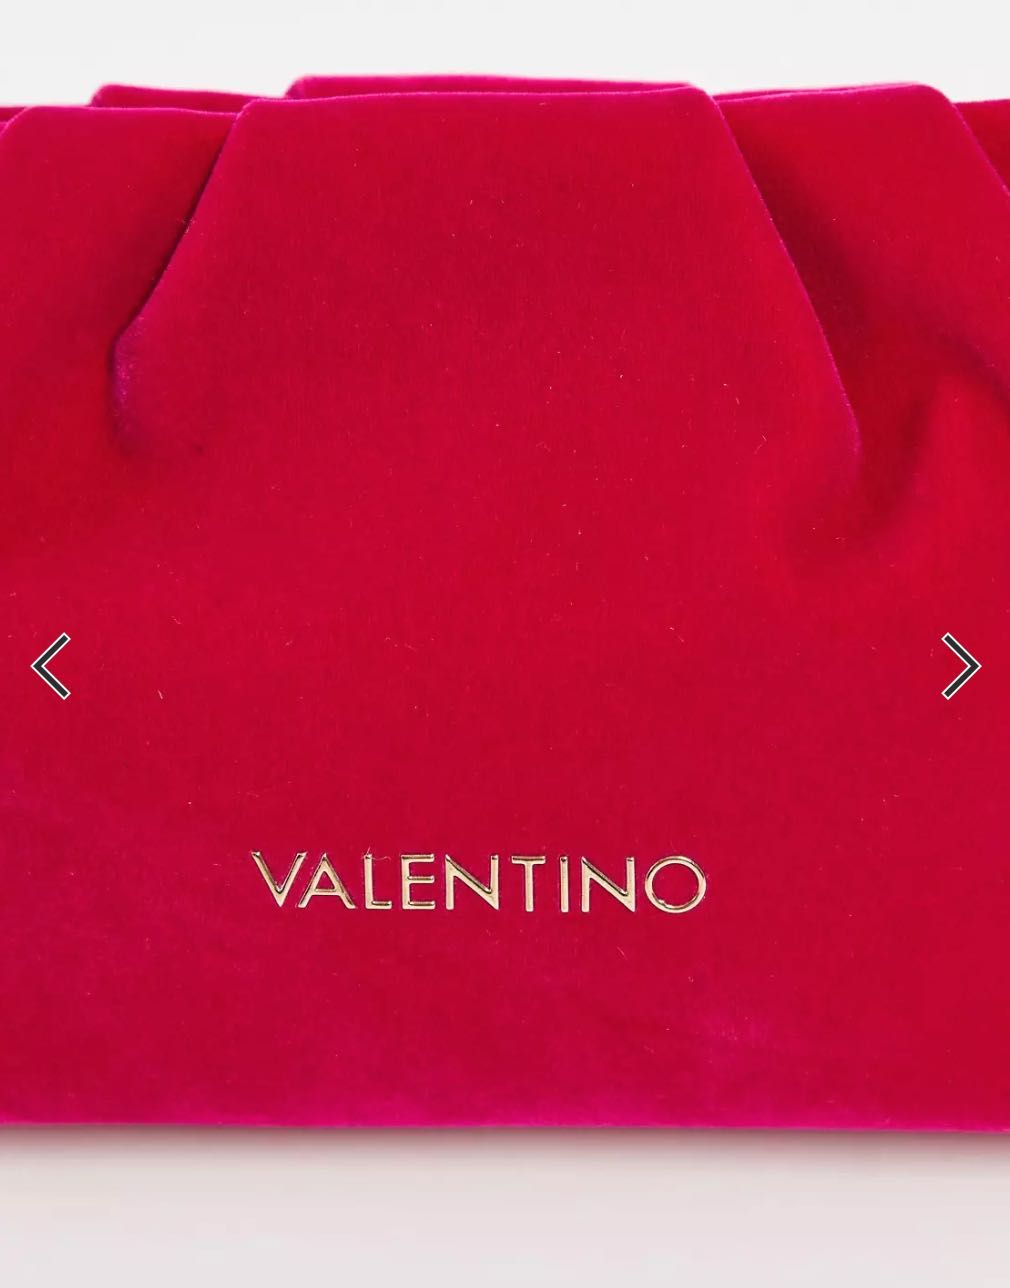 Valentino By Mario Valentino мини дамска чанта велур - цвят фуксия